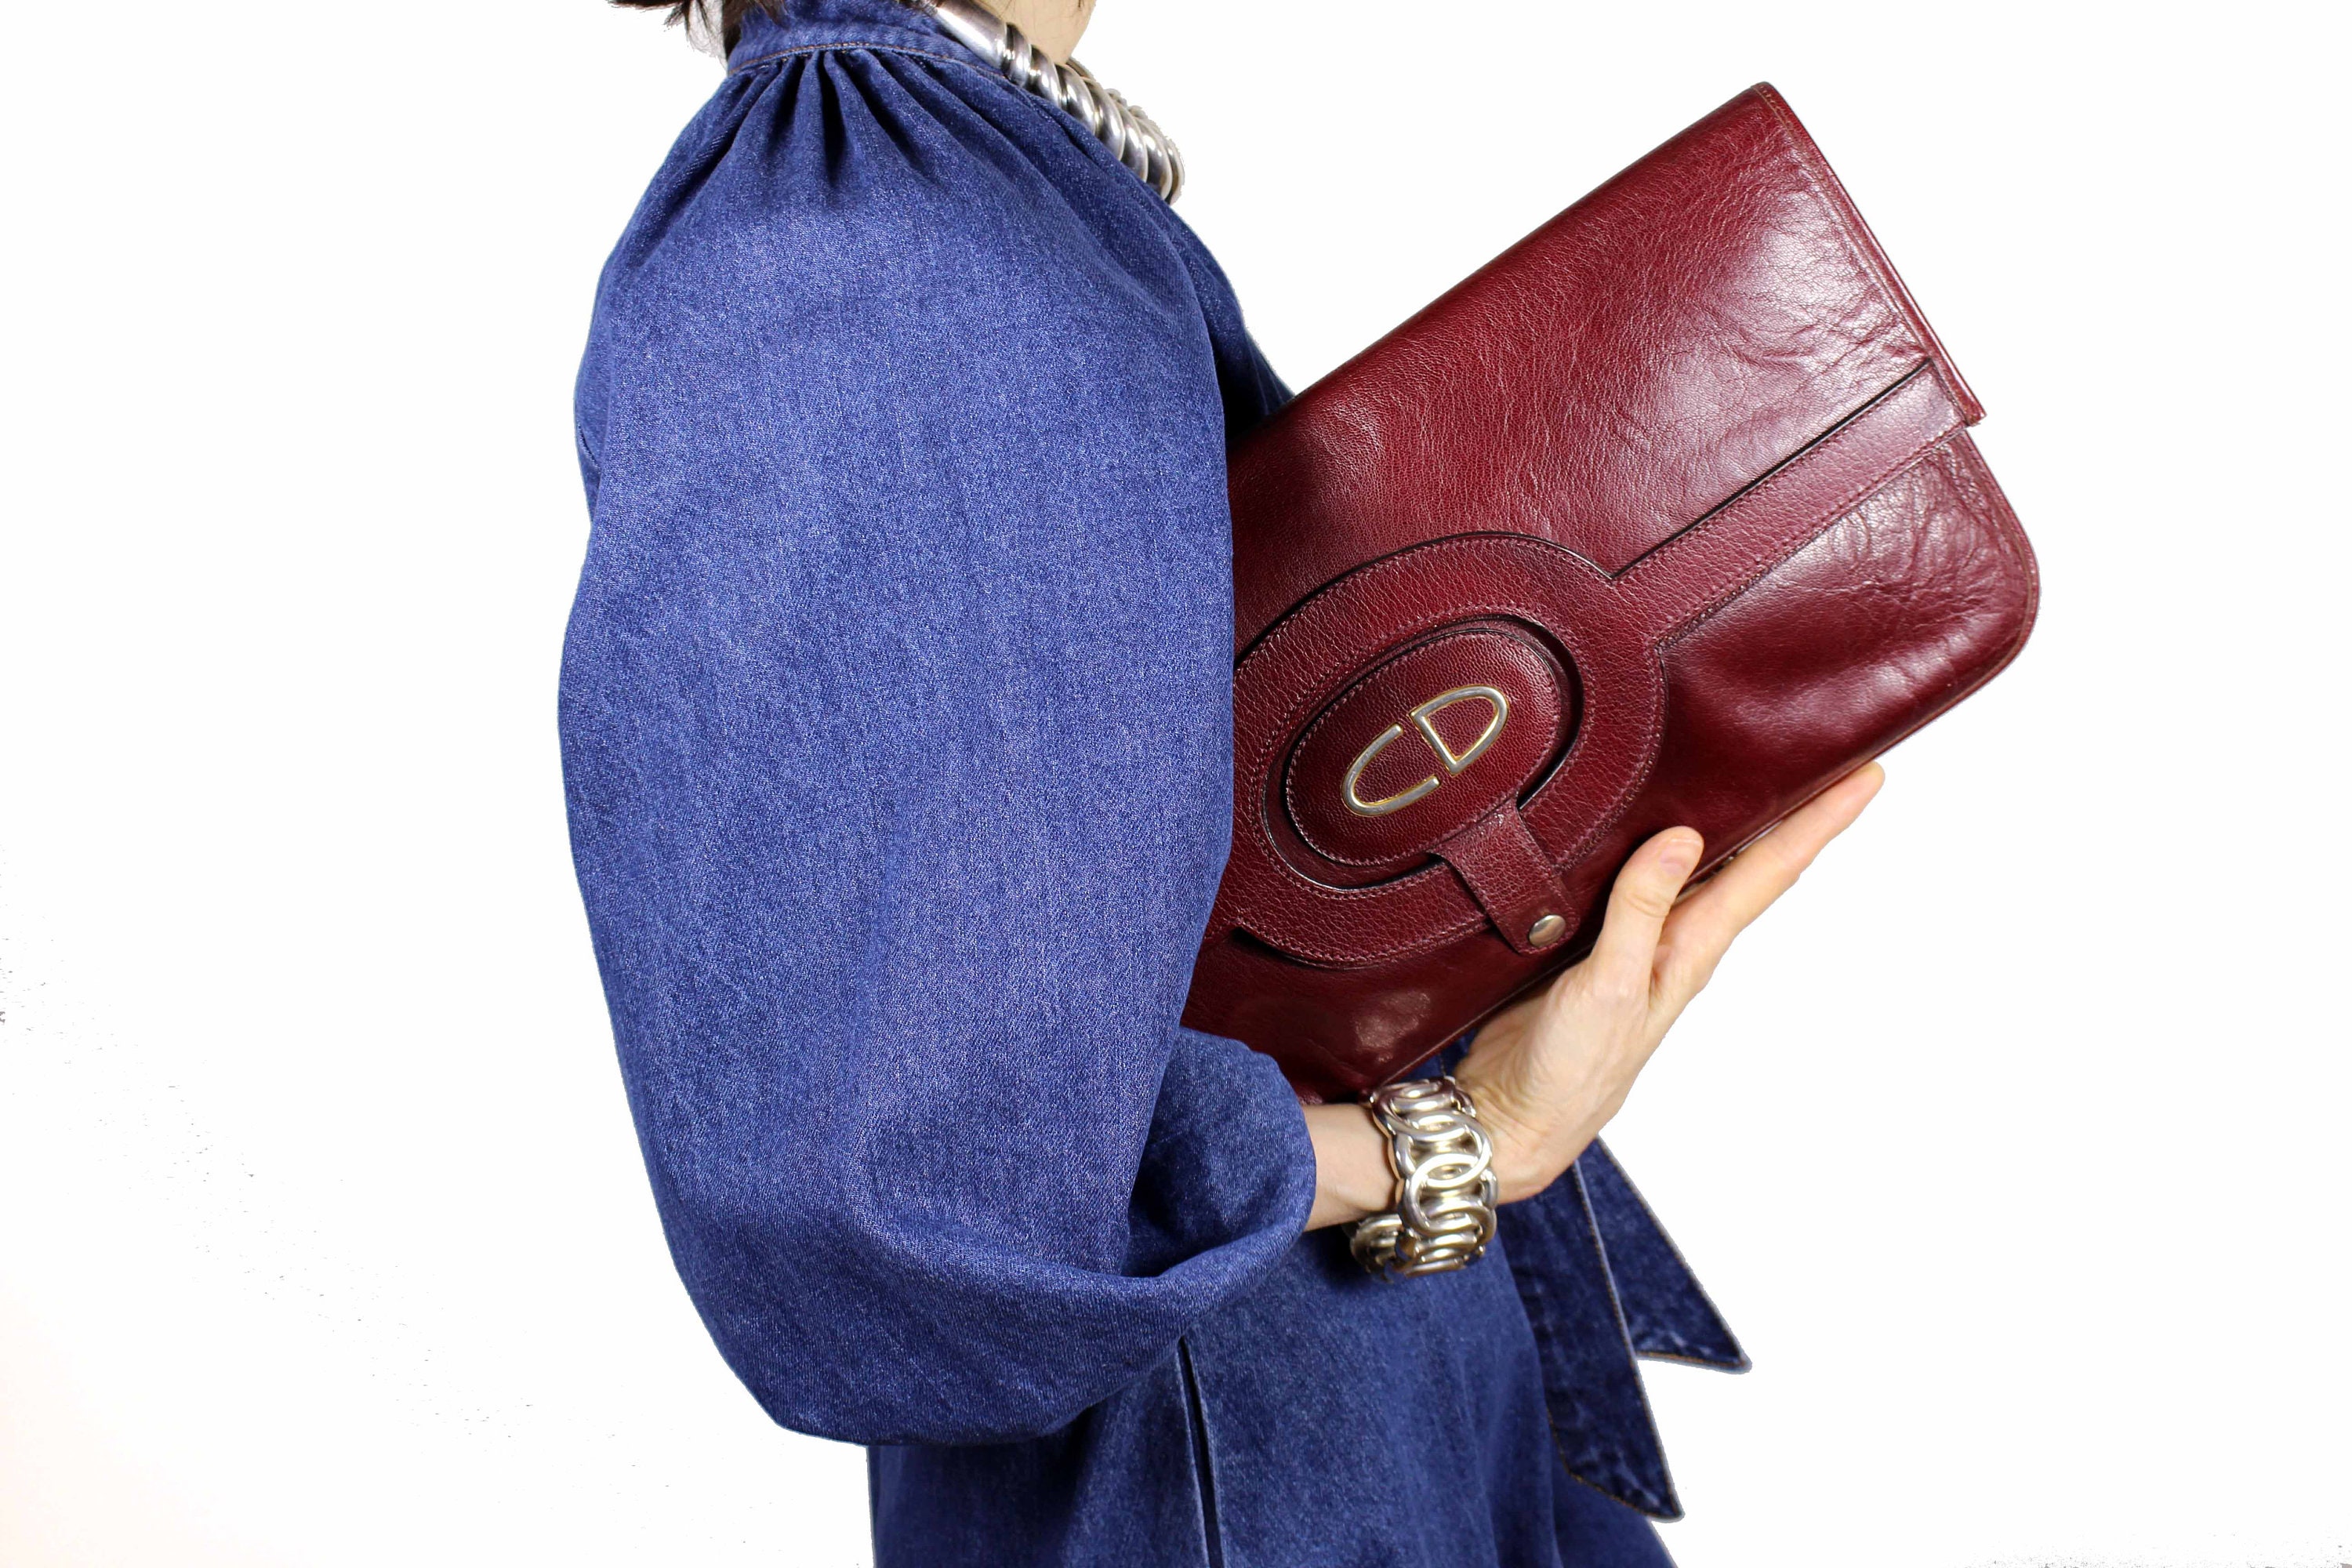 Christian Dior vintage burgundy leather bag secondhand Lysis